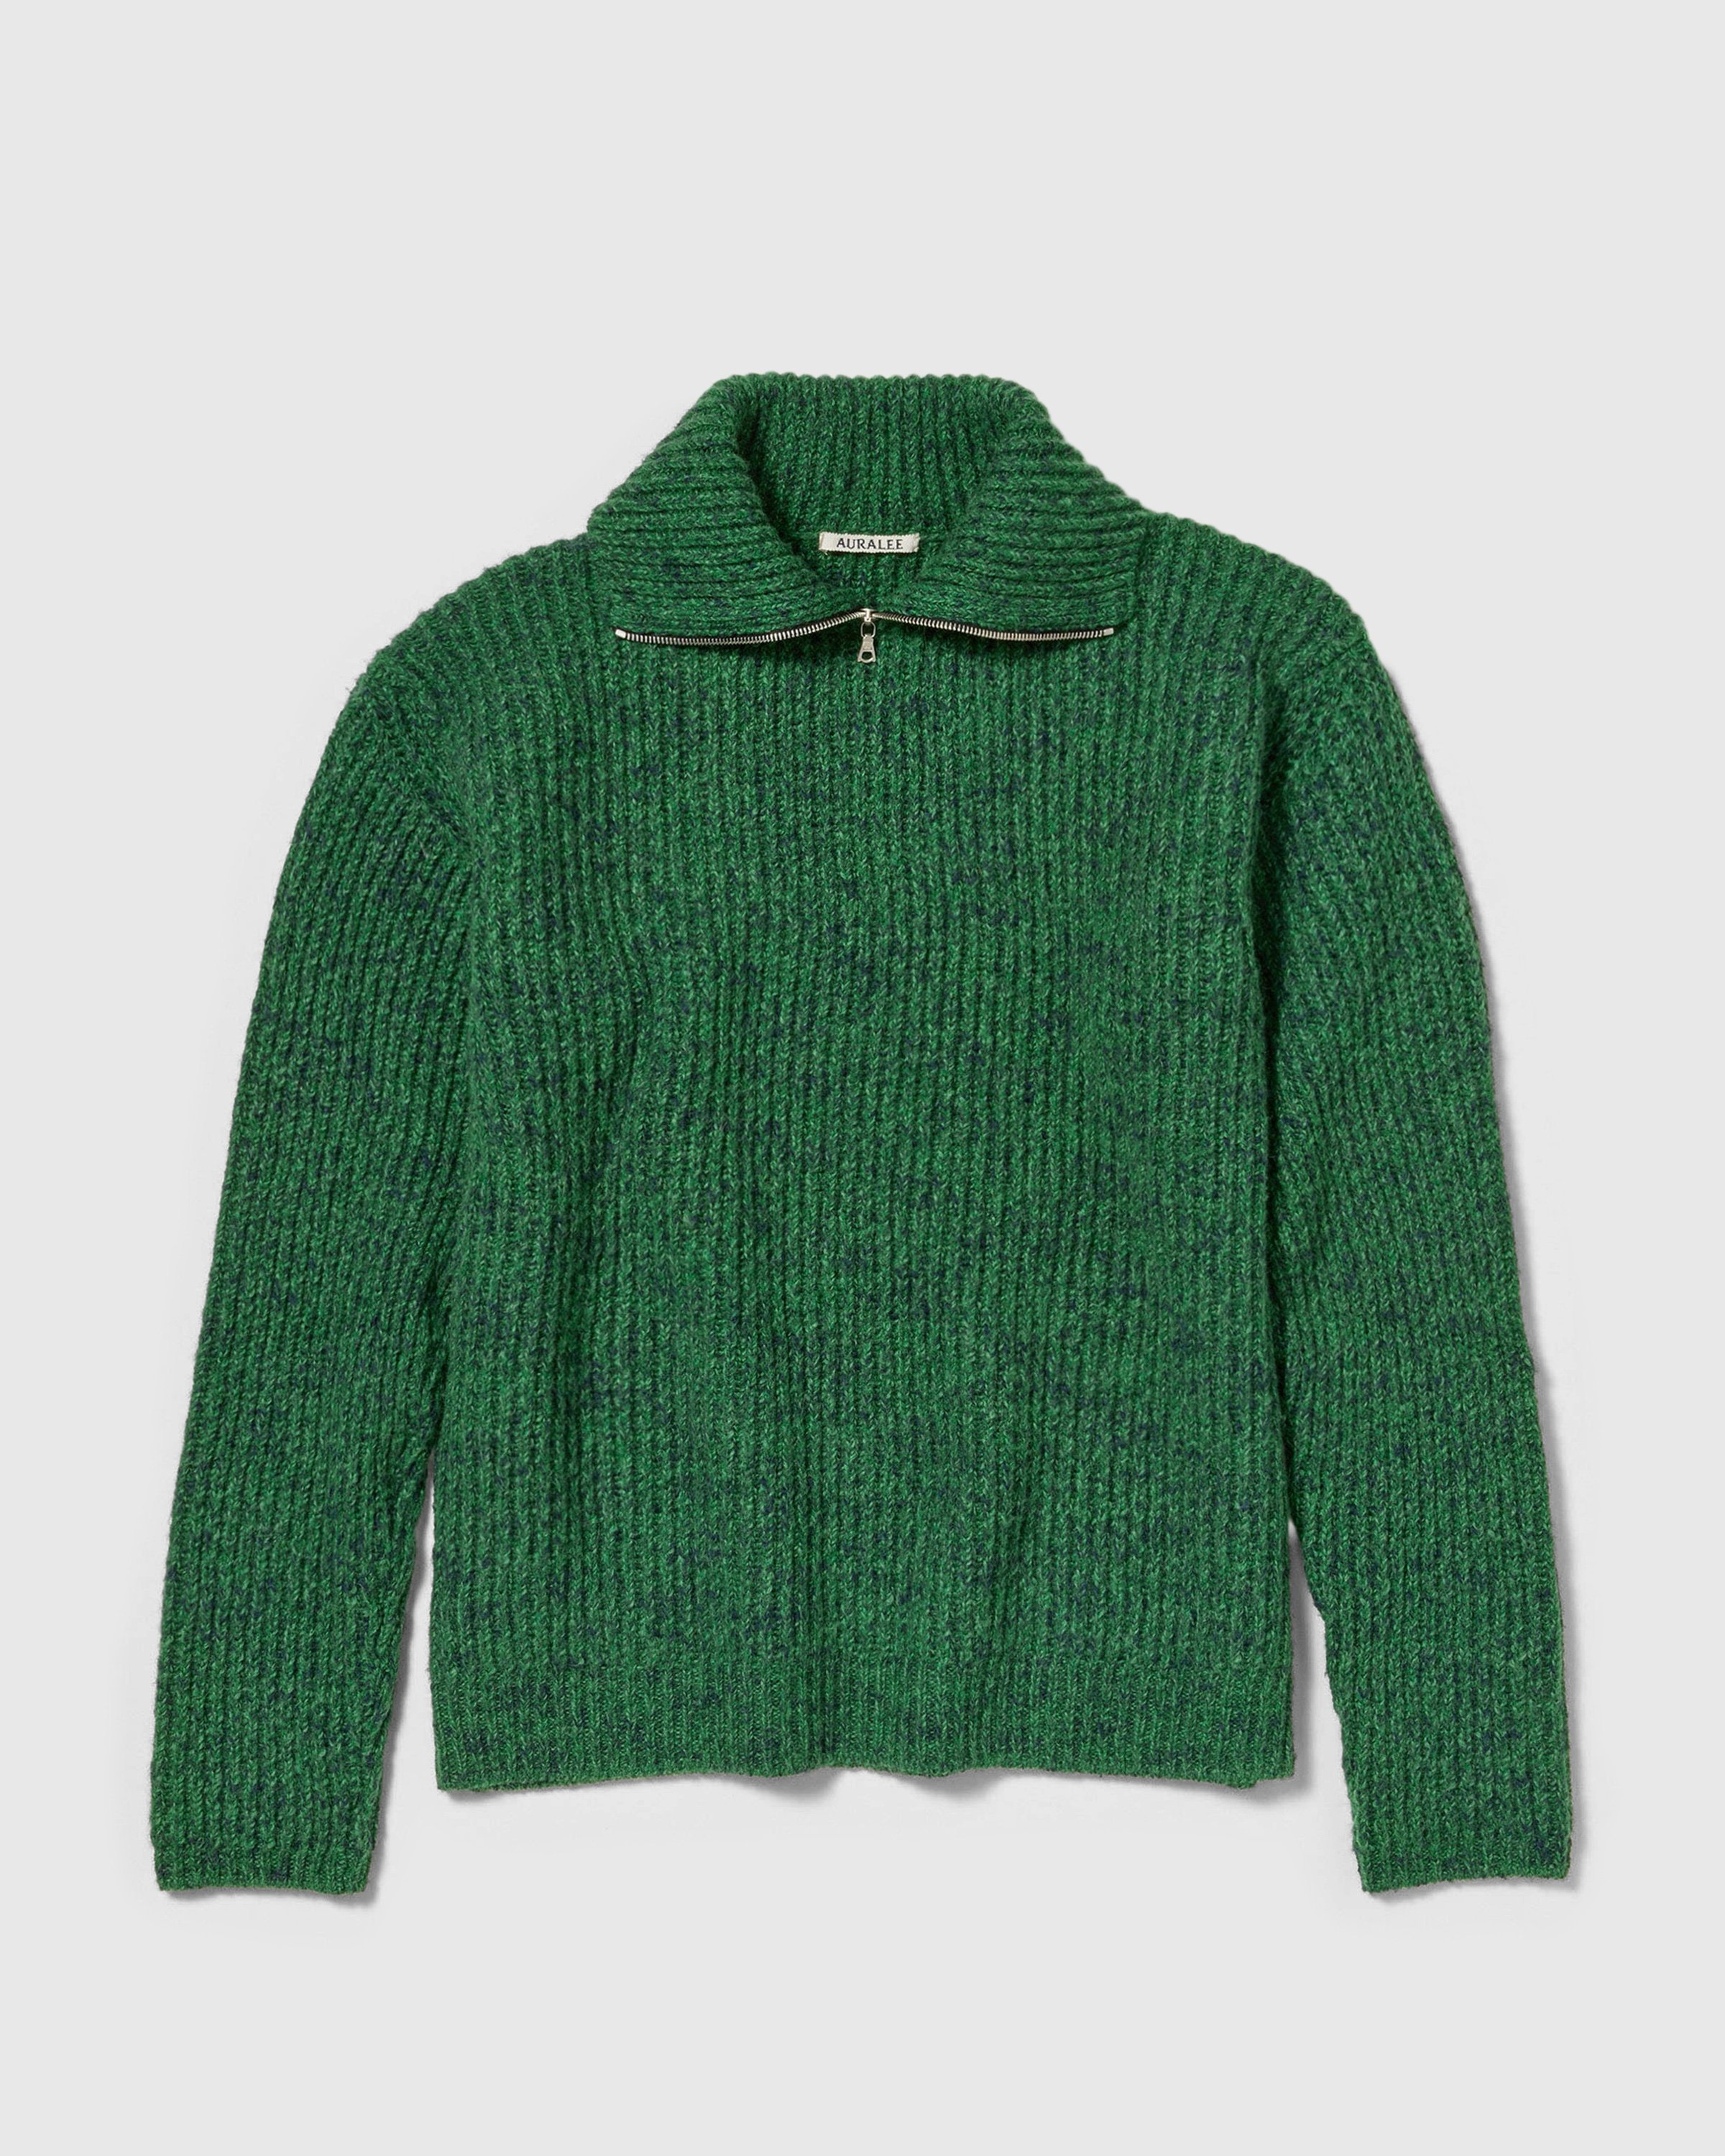 Auralee - Wool Baby Alpaca Mix Rib Knit Zip Turtle - Clothing - Green - Image 1